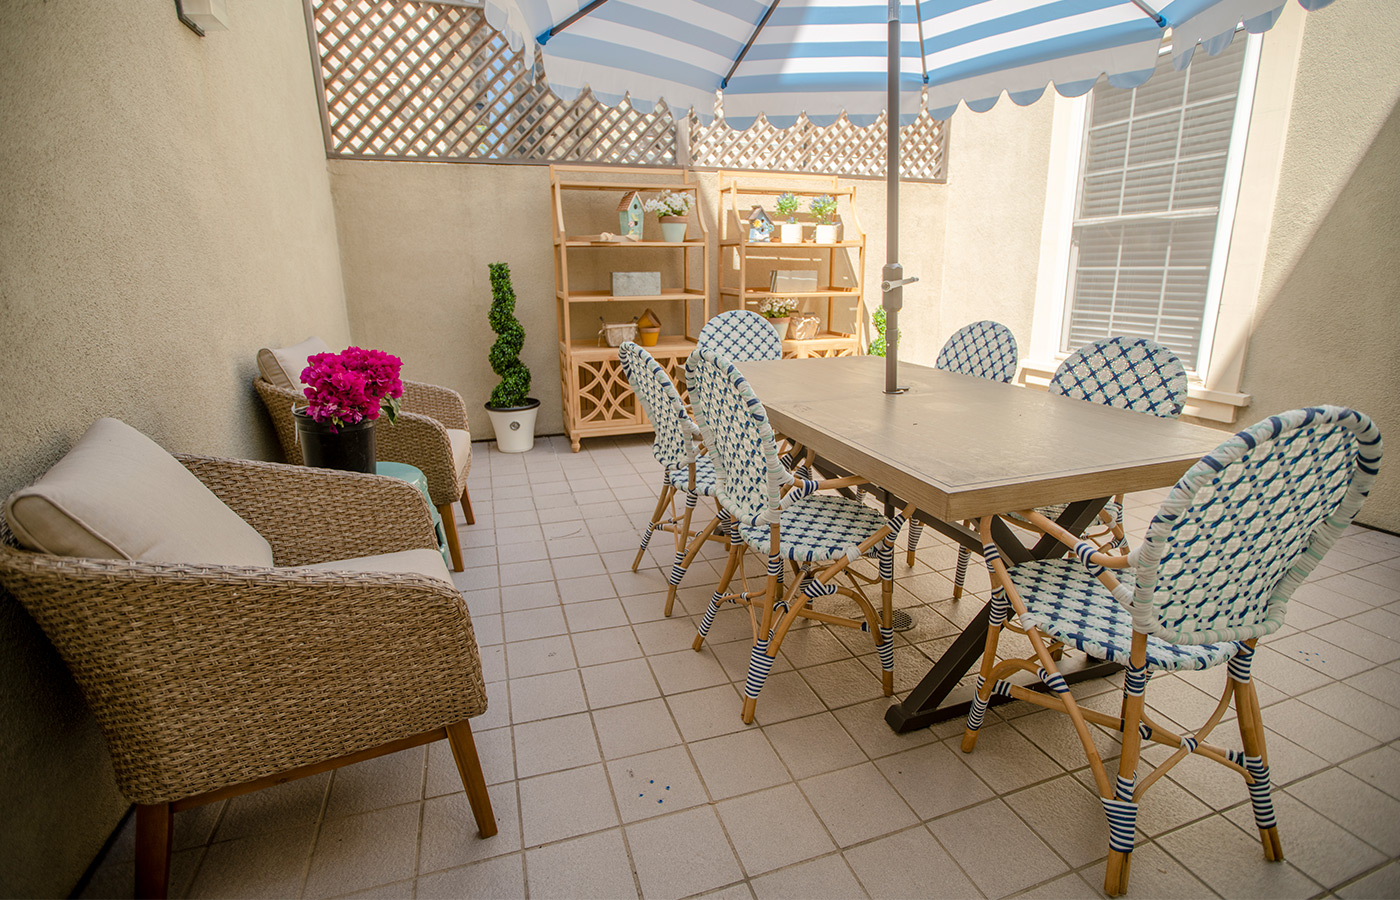 sunny patio area with patio furniture and umbrella